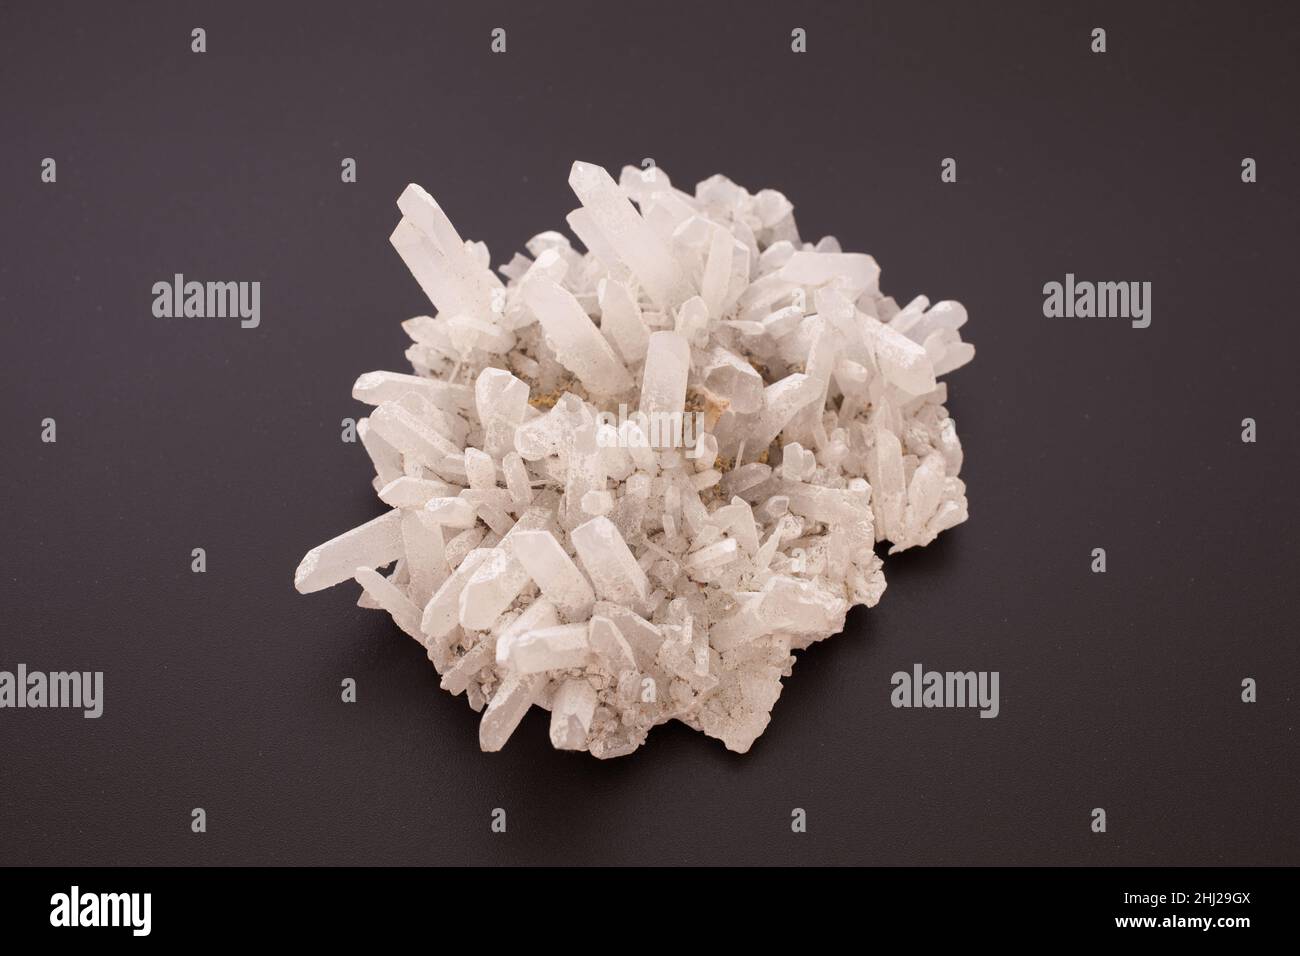 A clear quartz cluster against a black background Stock Photo